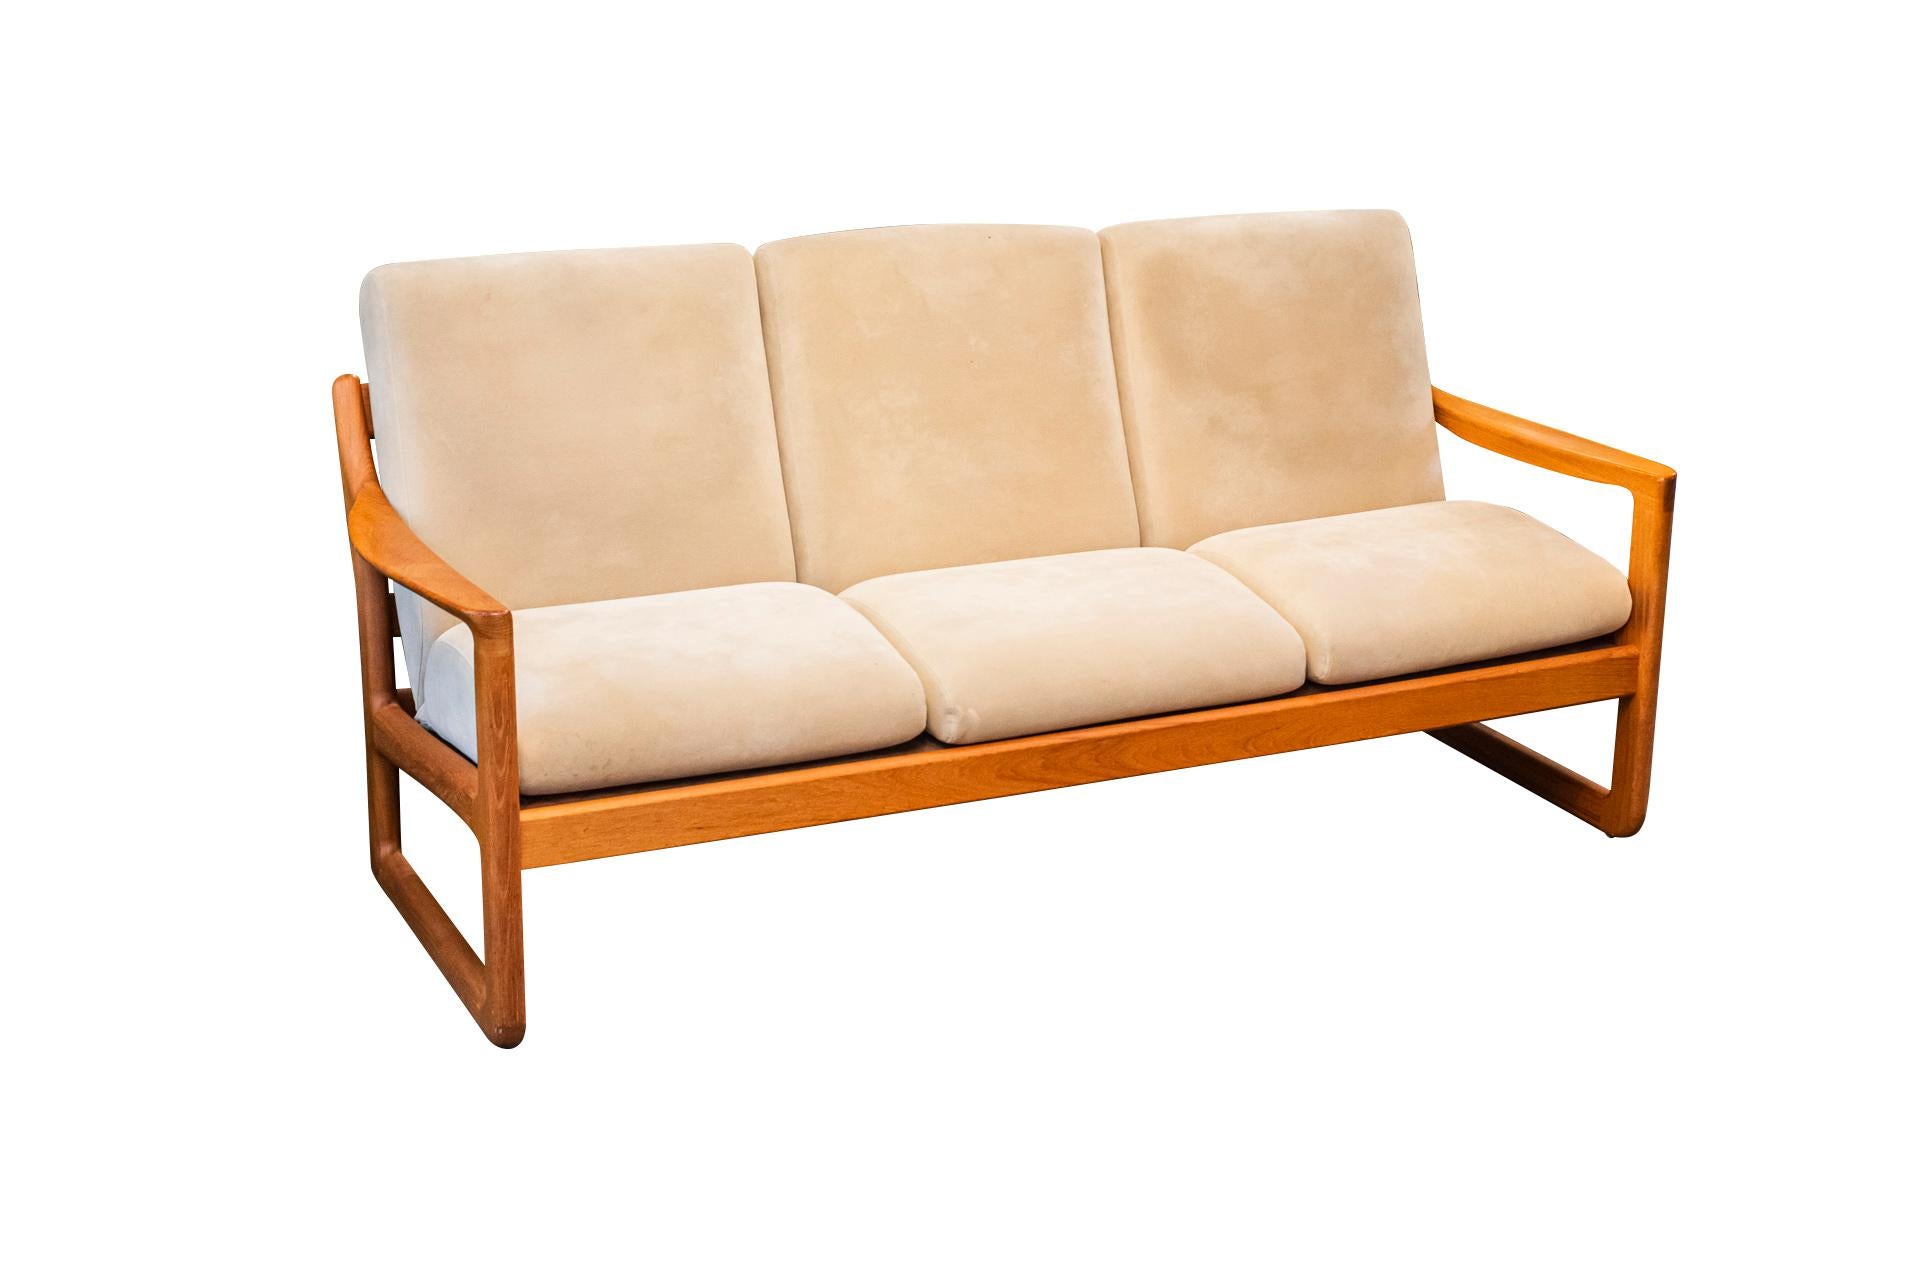 Johannes Andersen for CFC Silkeborg, three seater sofa,
Teak and beige fabric, 
Publisher label,
circa 1960, Danemark.

Measures : Height 93 cm, width 181 cm, depth 73 cm.